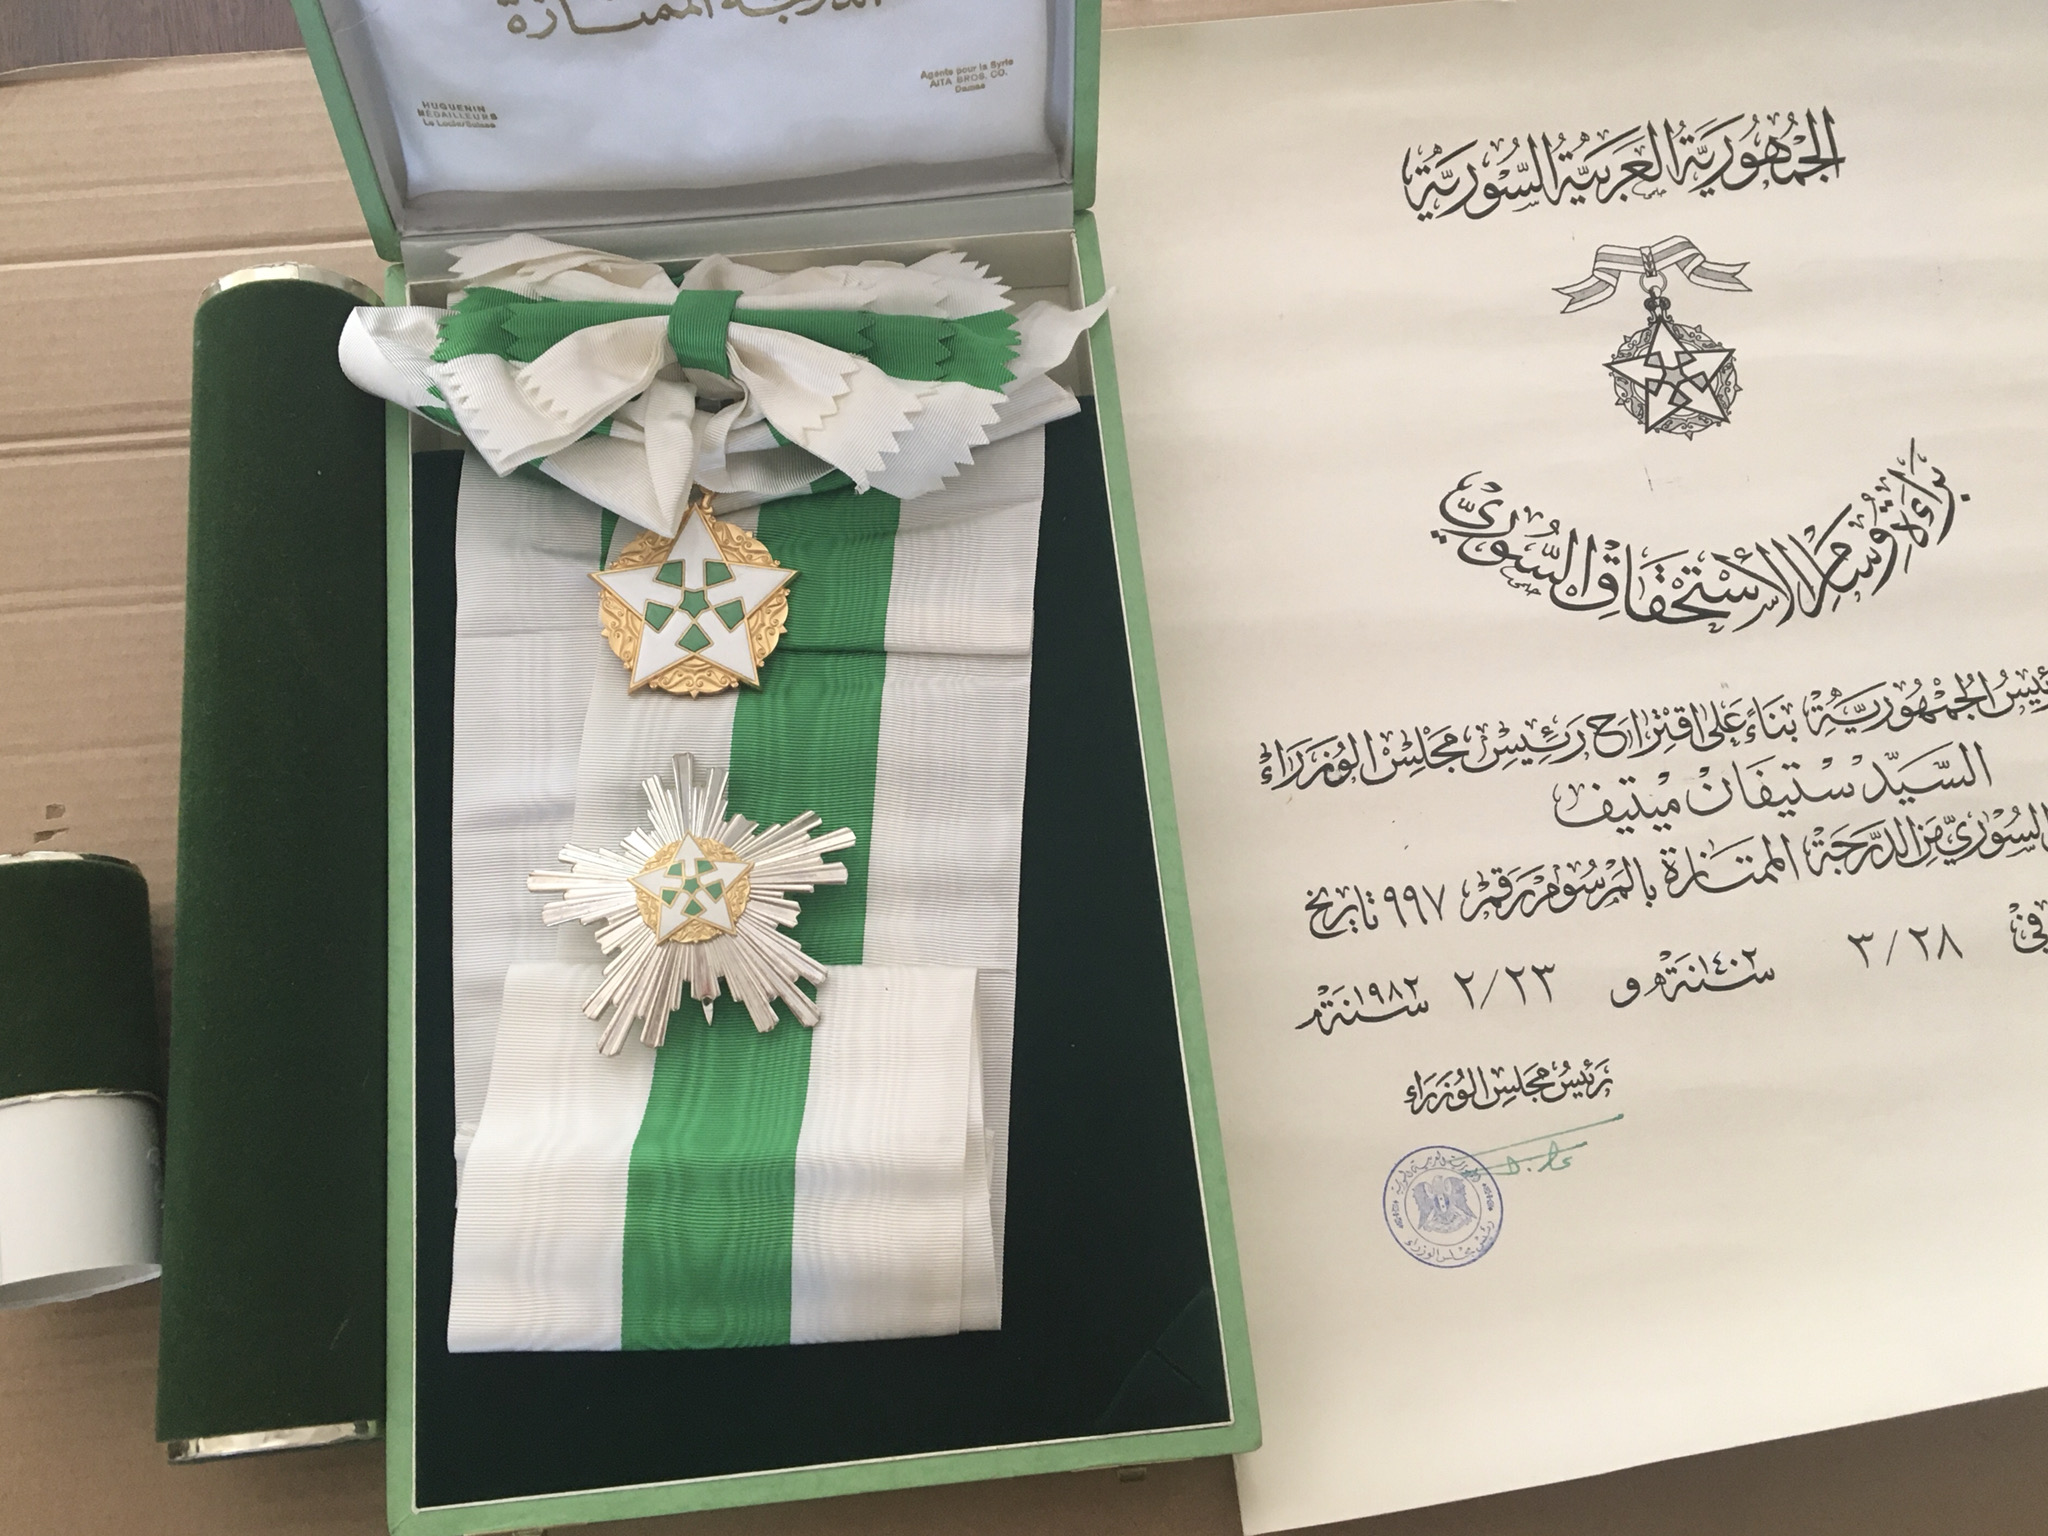 1953 Syria Arab Republic Order of Civil Merit Grand Cross Medal Badge Nichan Nut